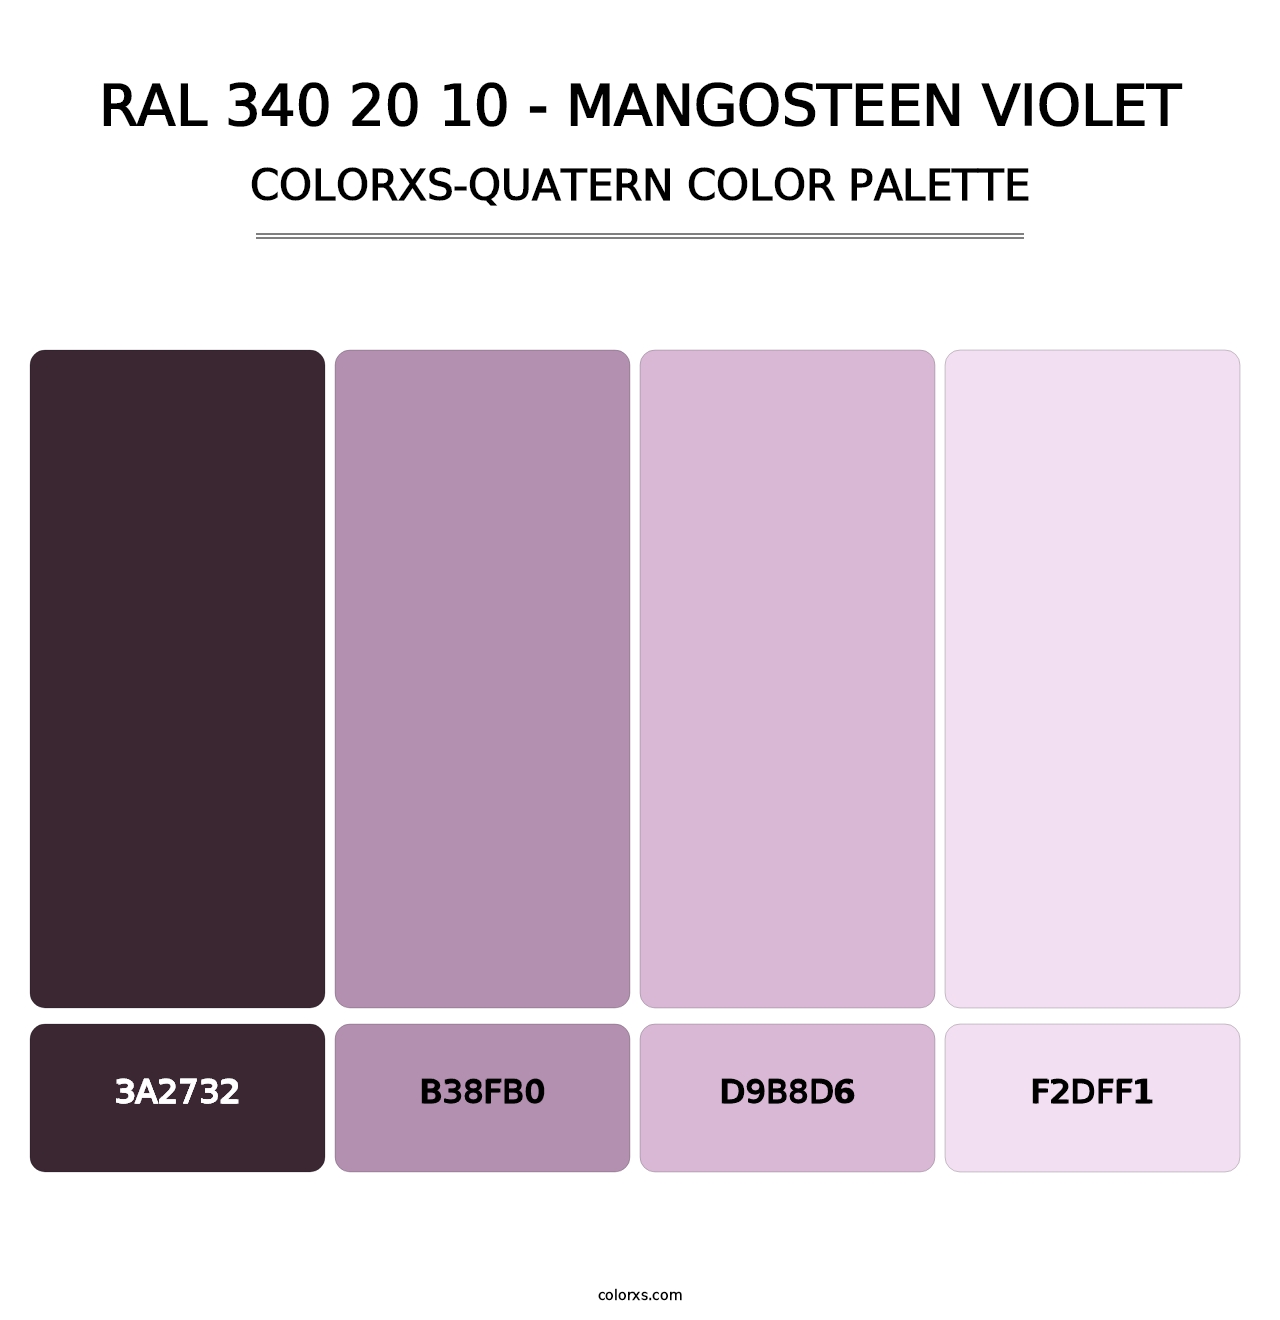 RAL 340 20 10 - Mangosteen Violet - Colorxs Quatern Palette